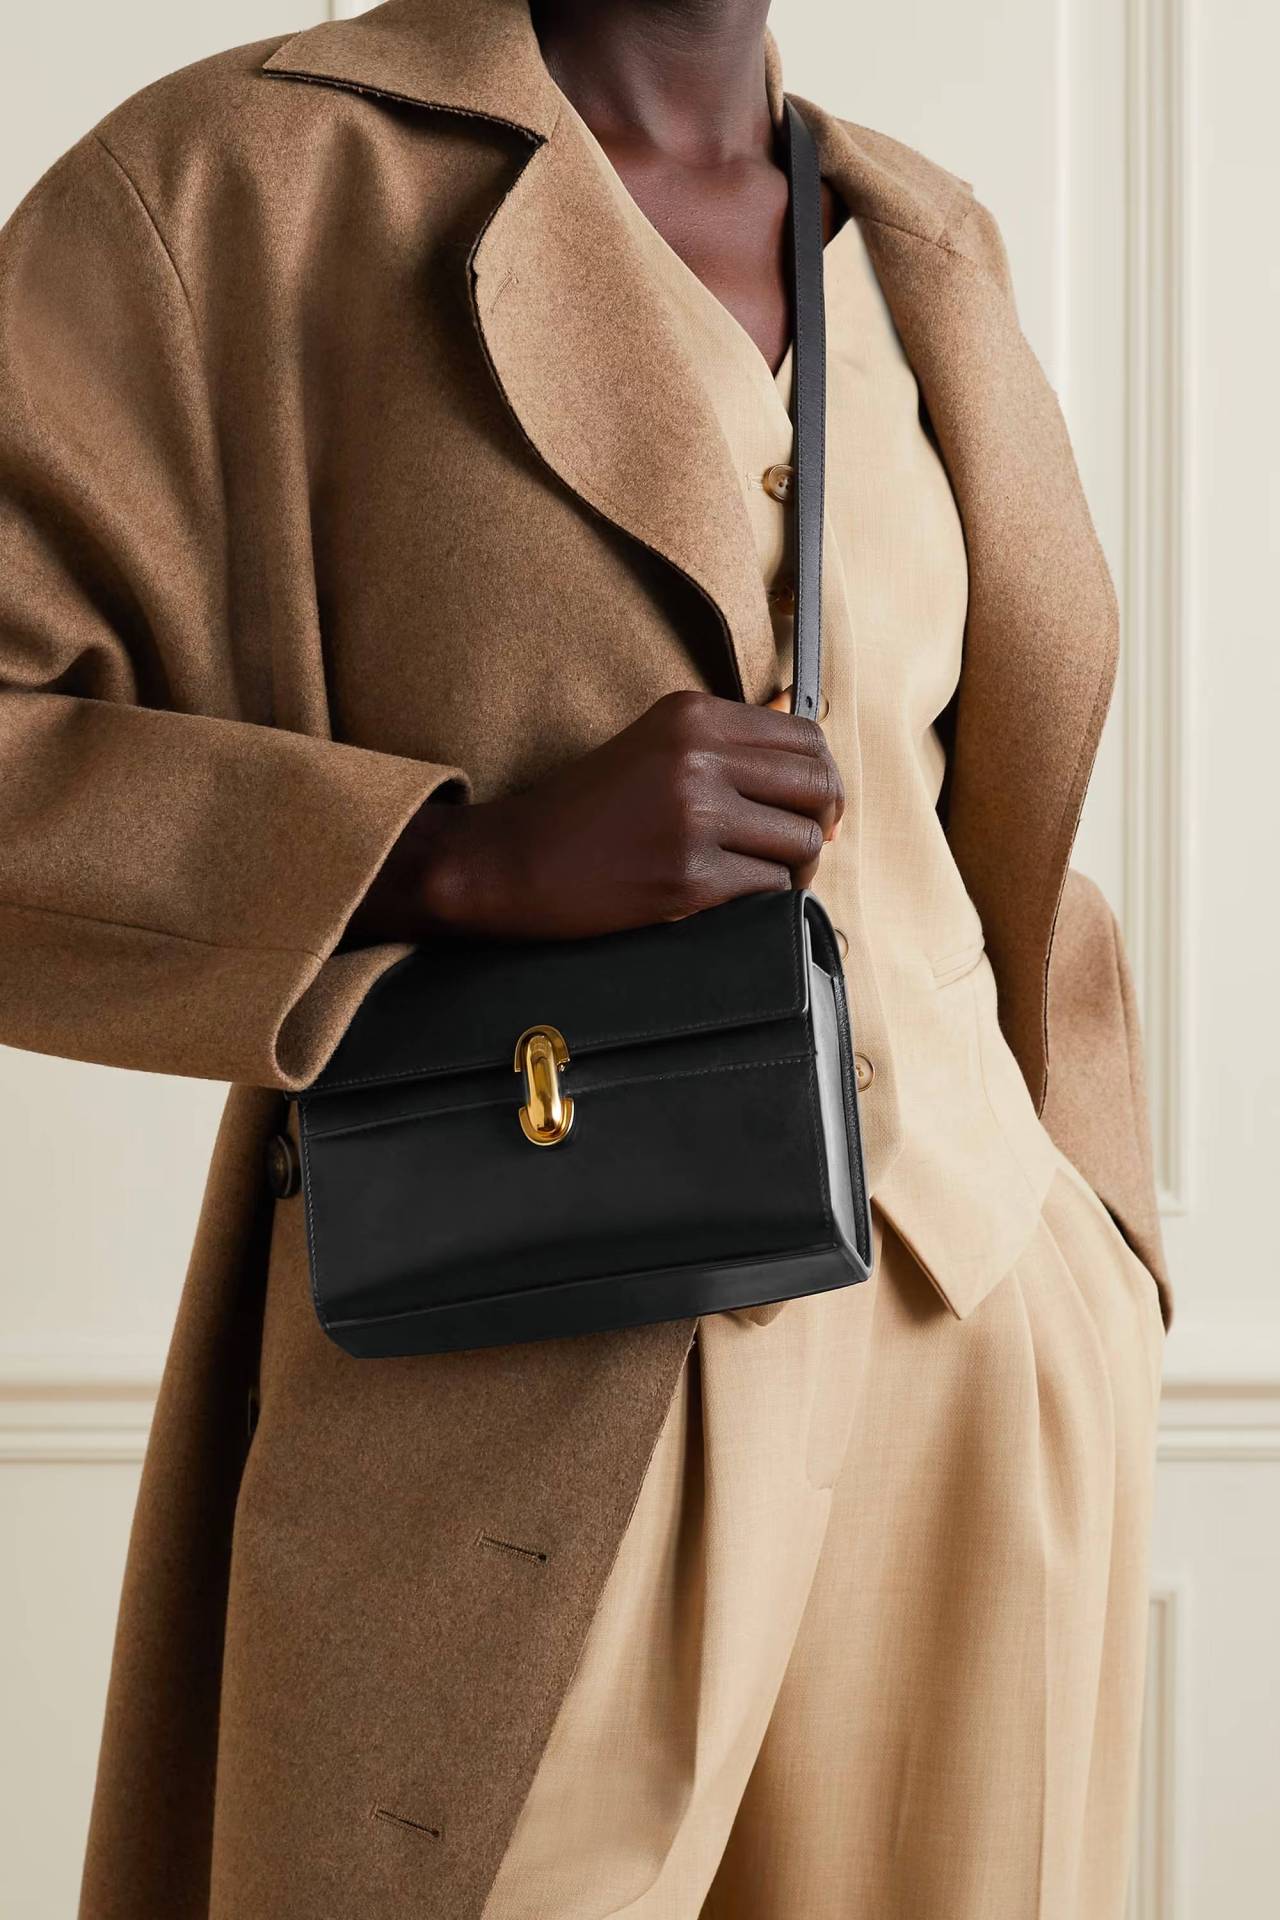 The Best Leather Handbags In Australia 2023 - Vogue Australia